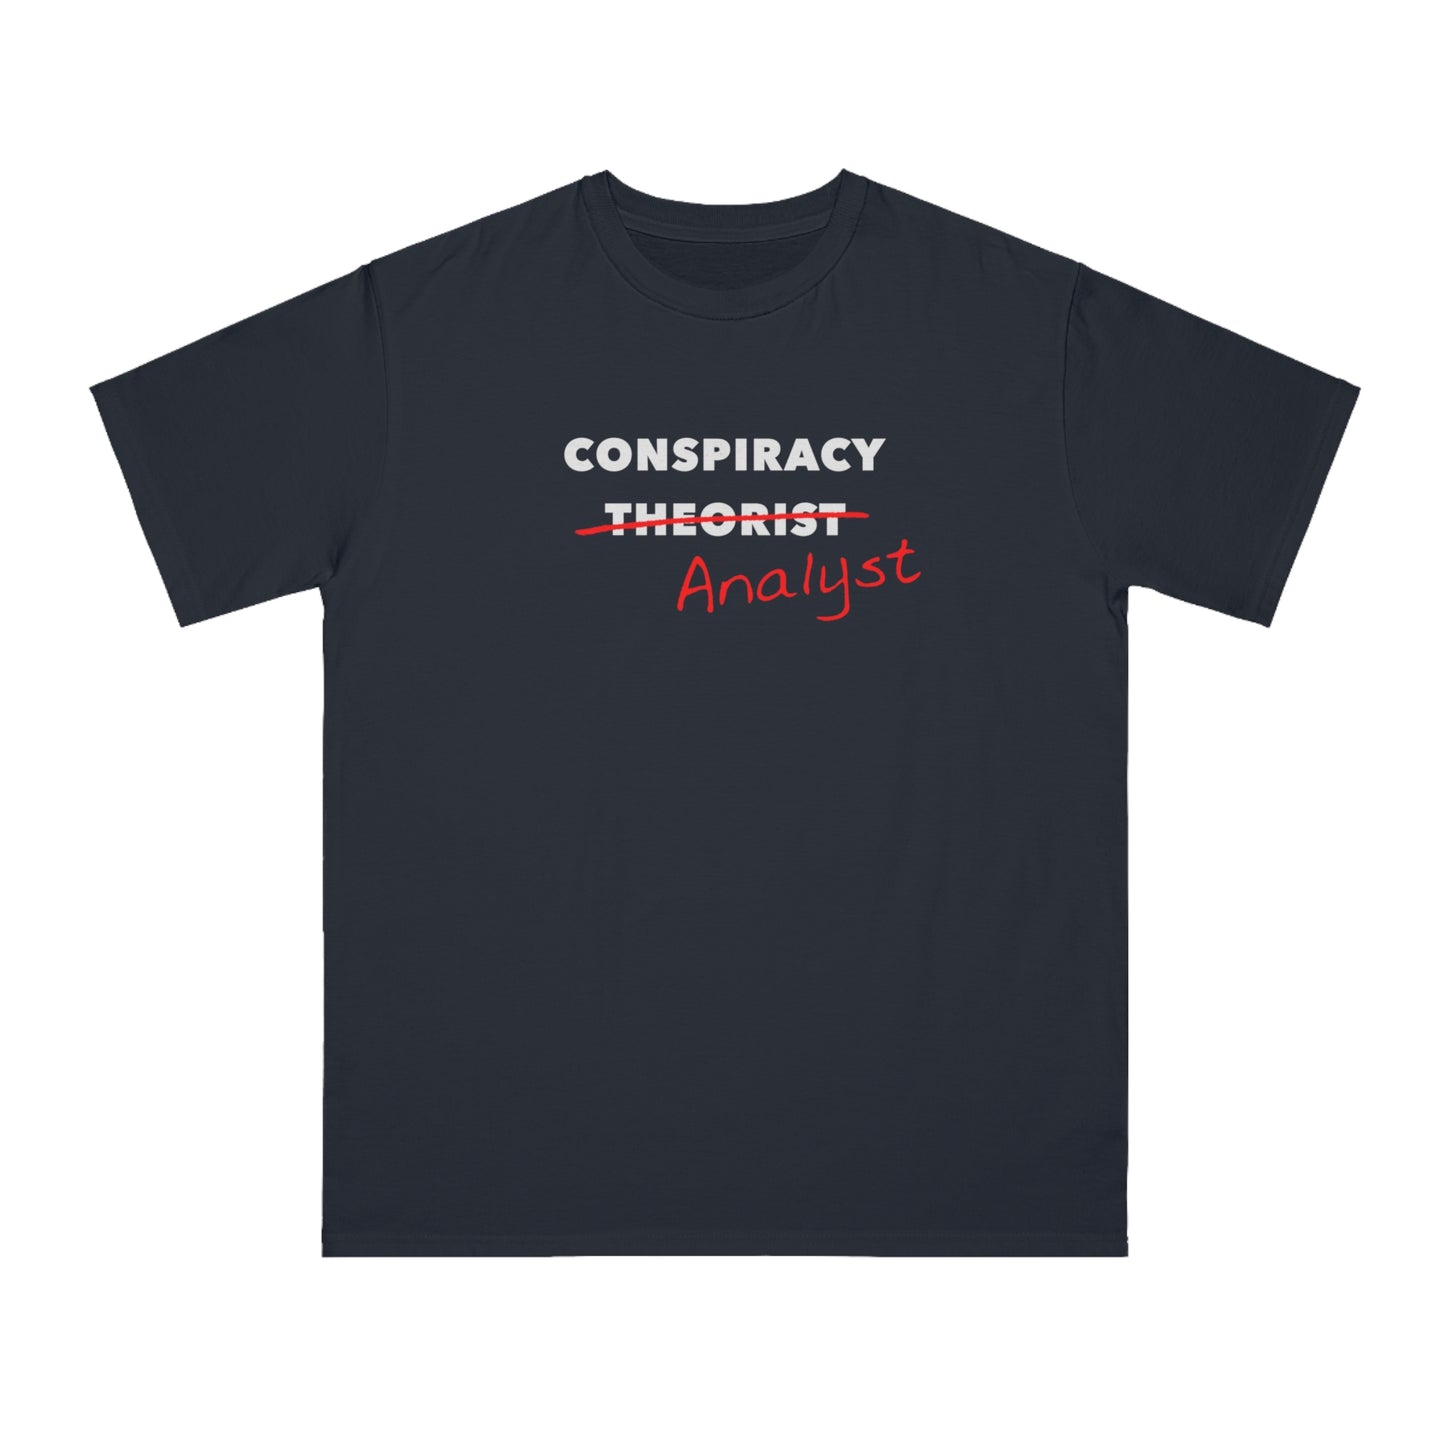 Conspiracy Analyst Organic Cotton Unisex Classic T-Shirt